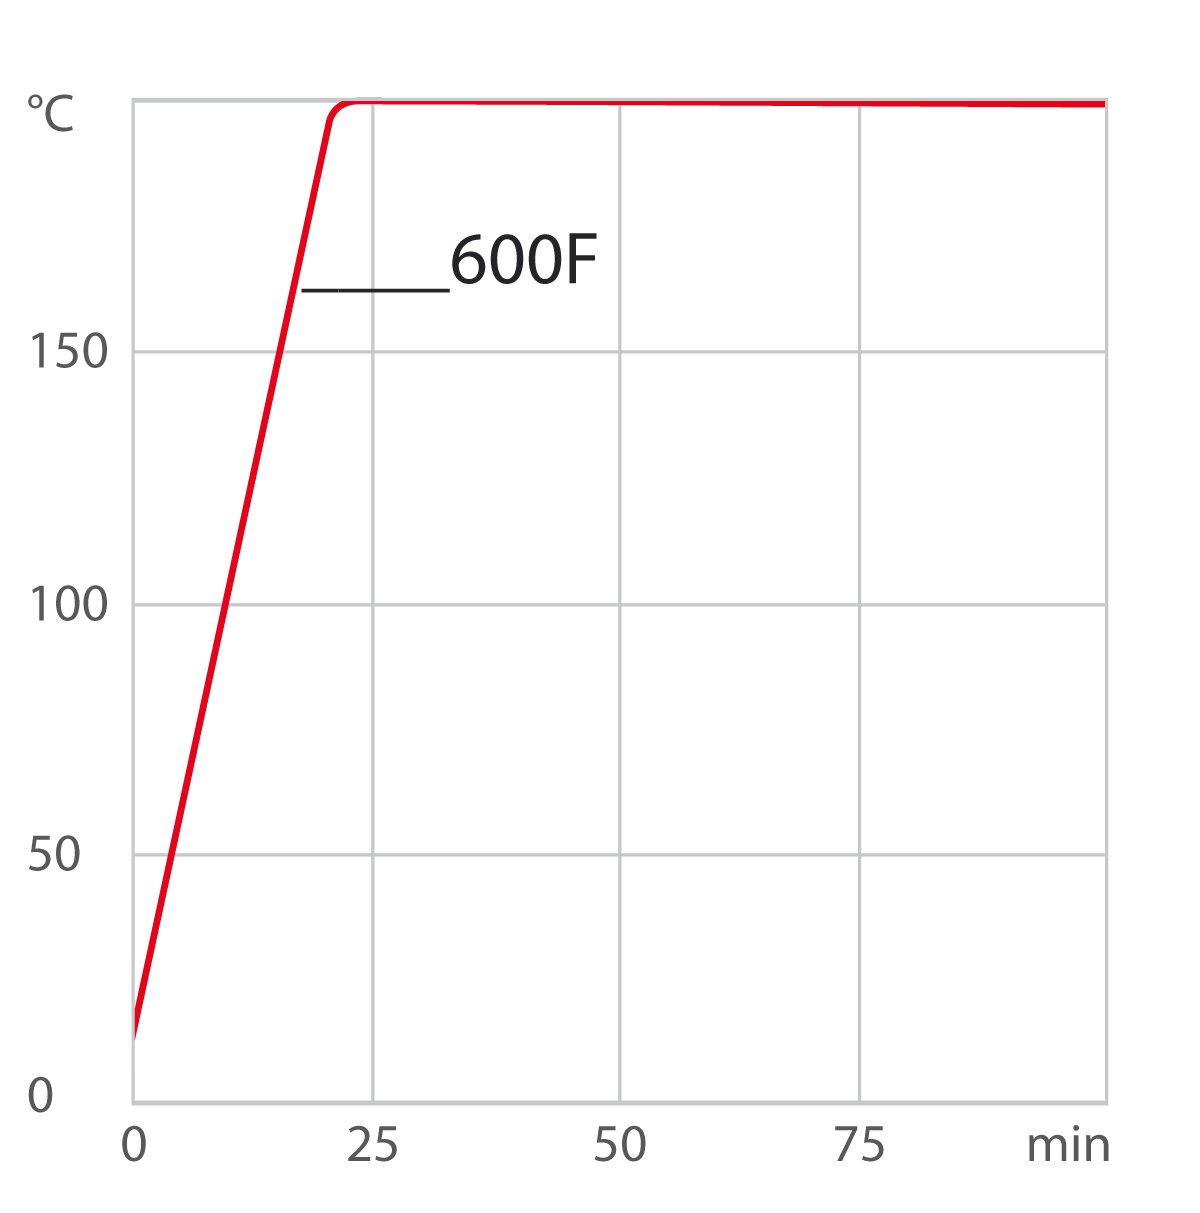 Heating curve refrigerated circulator 600F